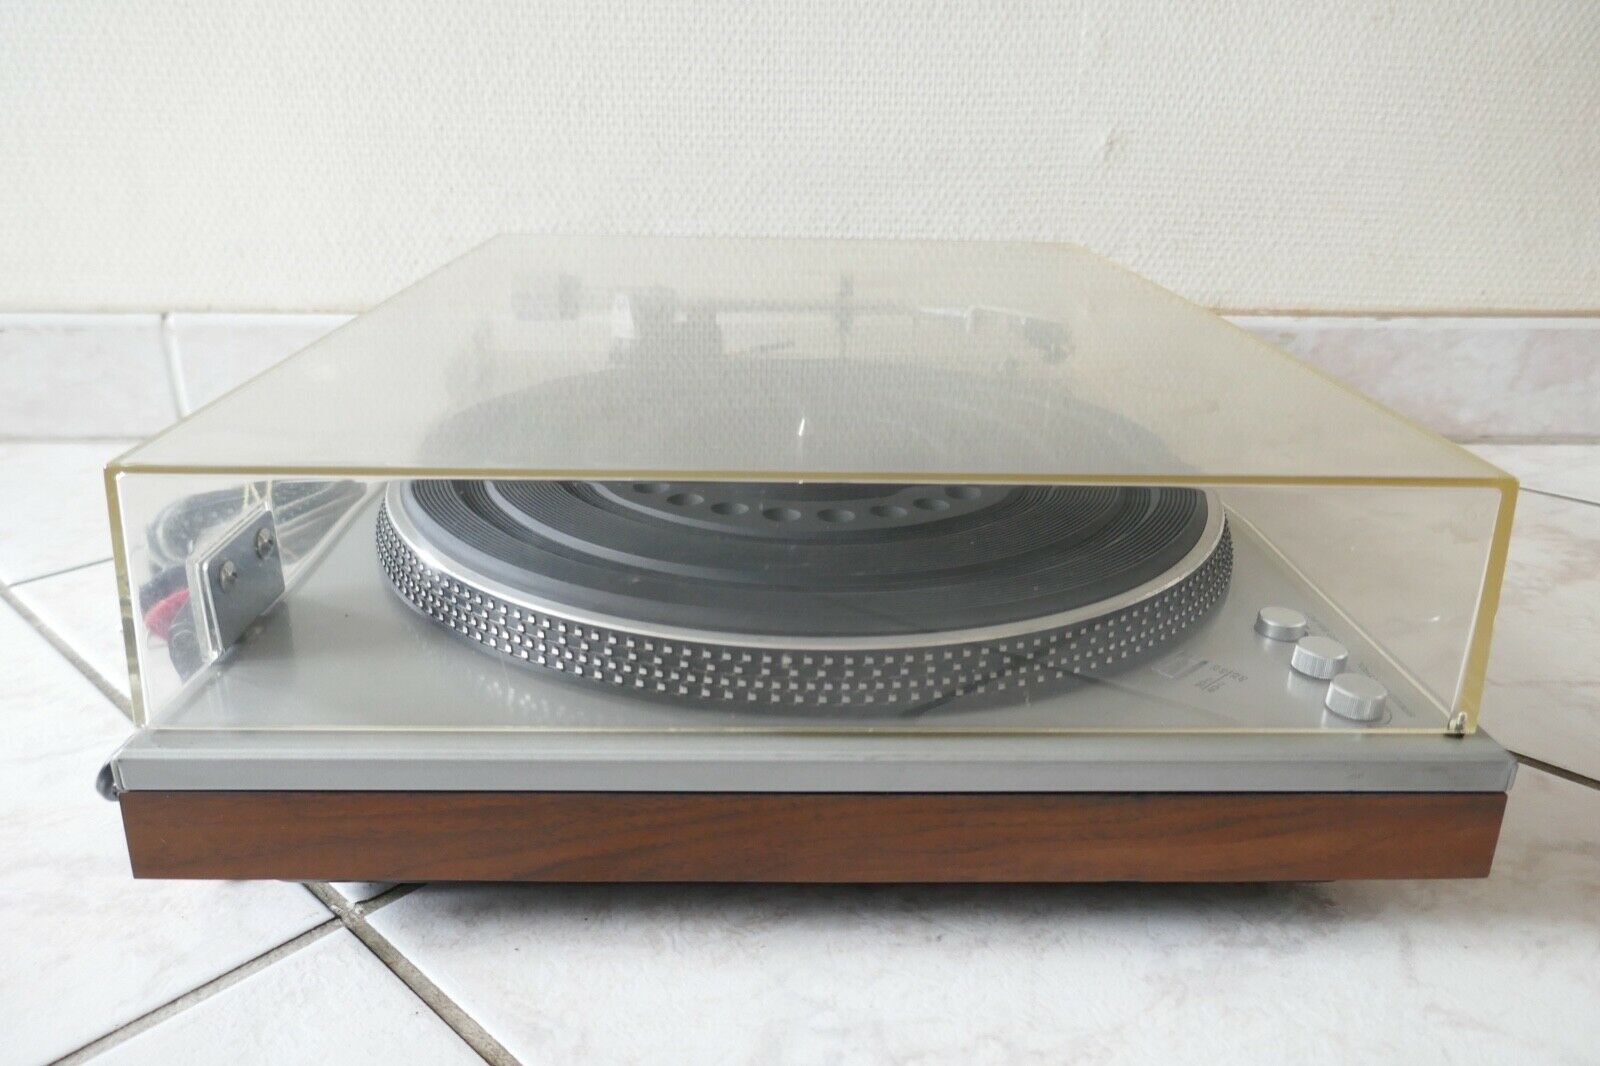 platine vinyle turntable toshiba SR-F330 vintage occasion